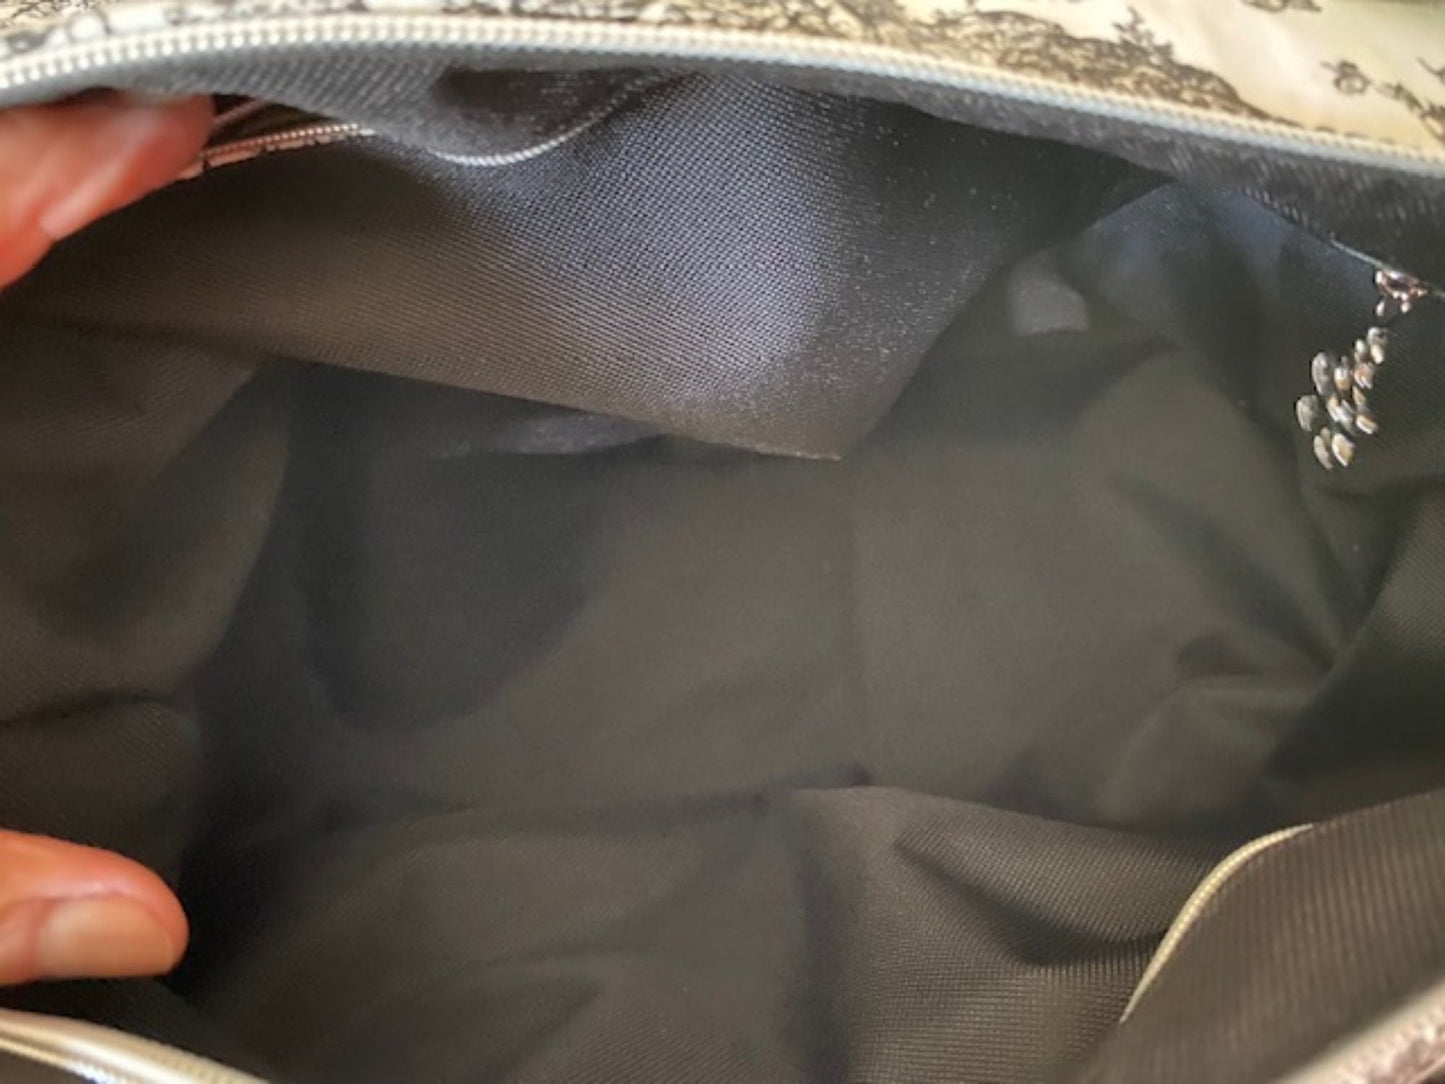 Brooklyn Traveler Bag Black White Toile fabric Large size handbag Zippers!! Shoulder Strap